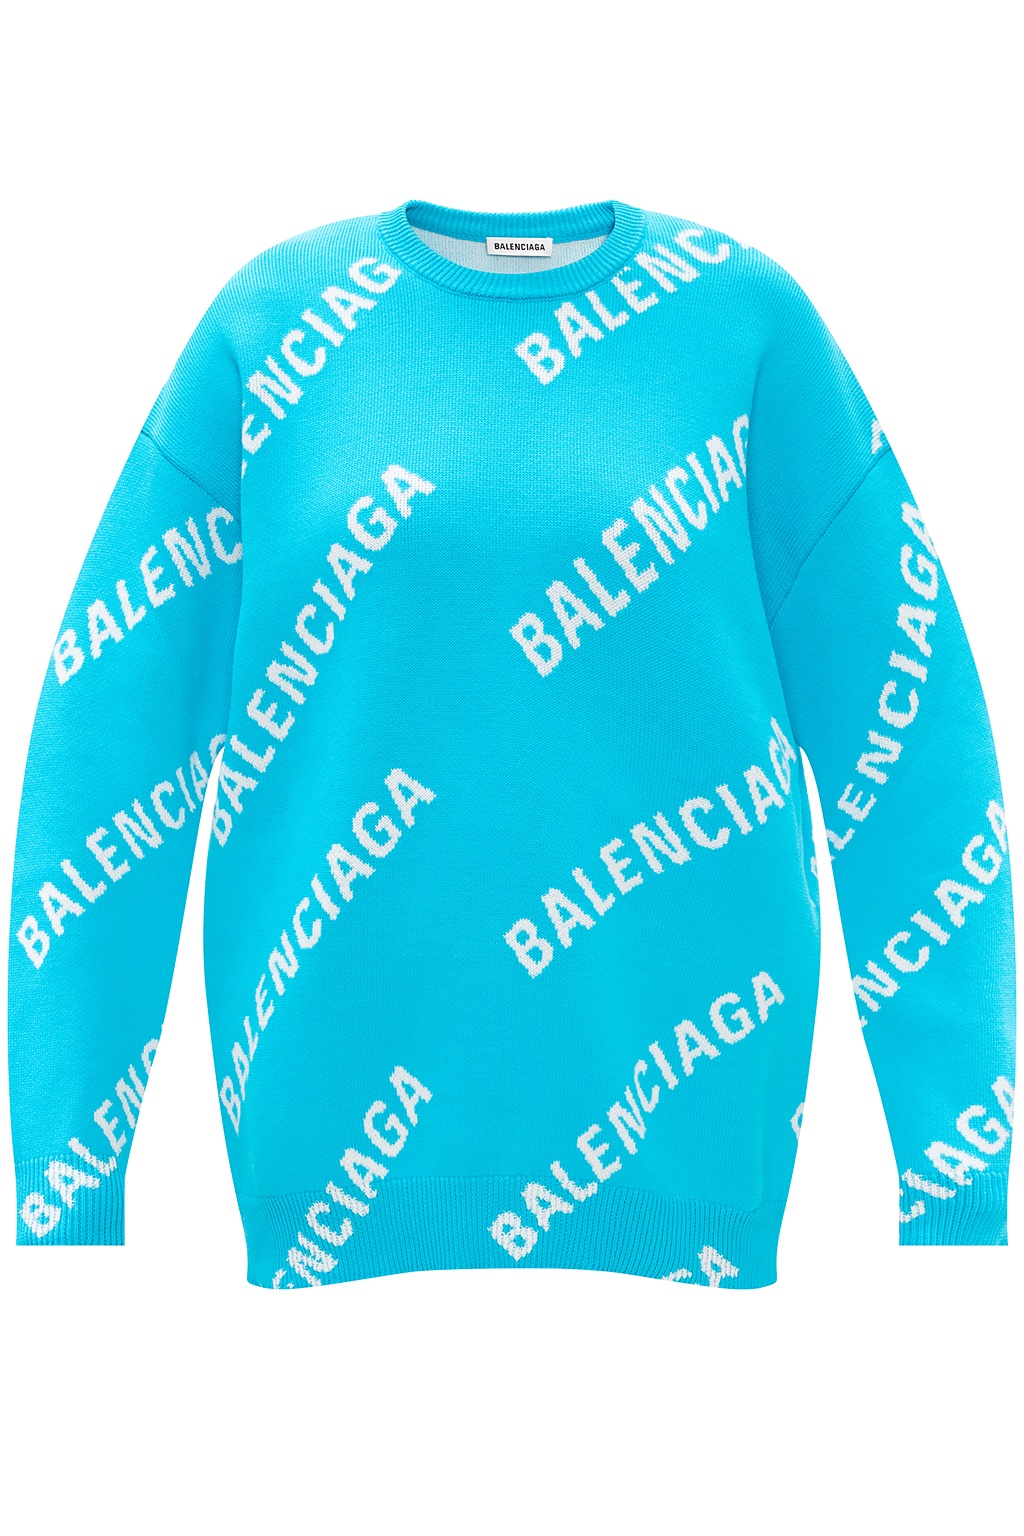 balenciaga turquoise sweater